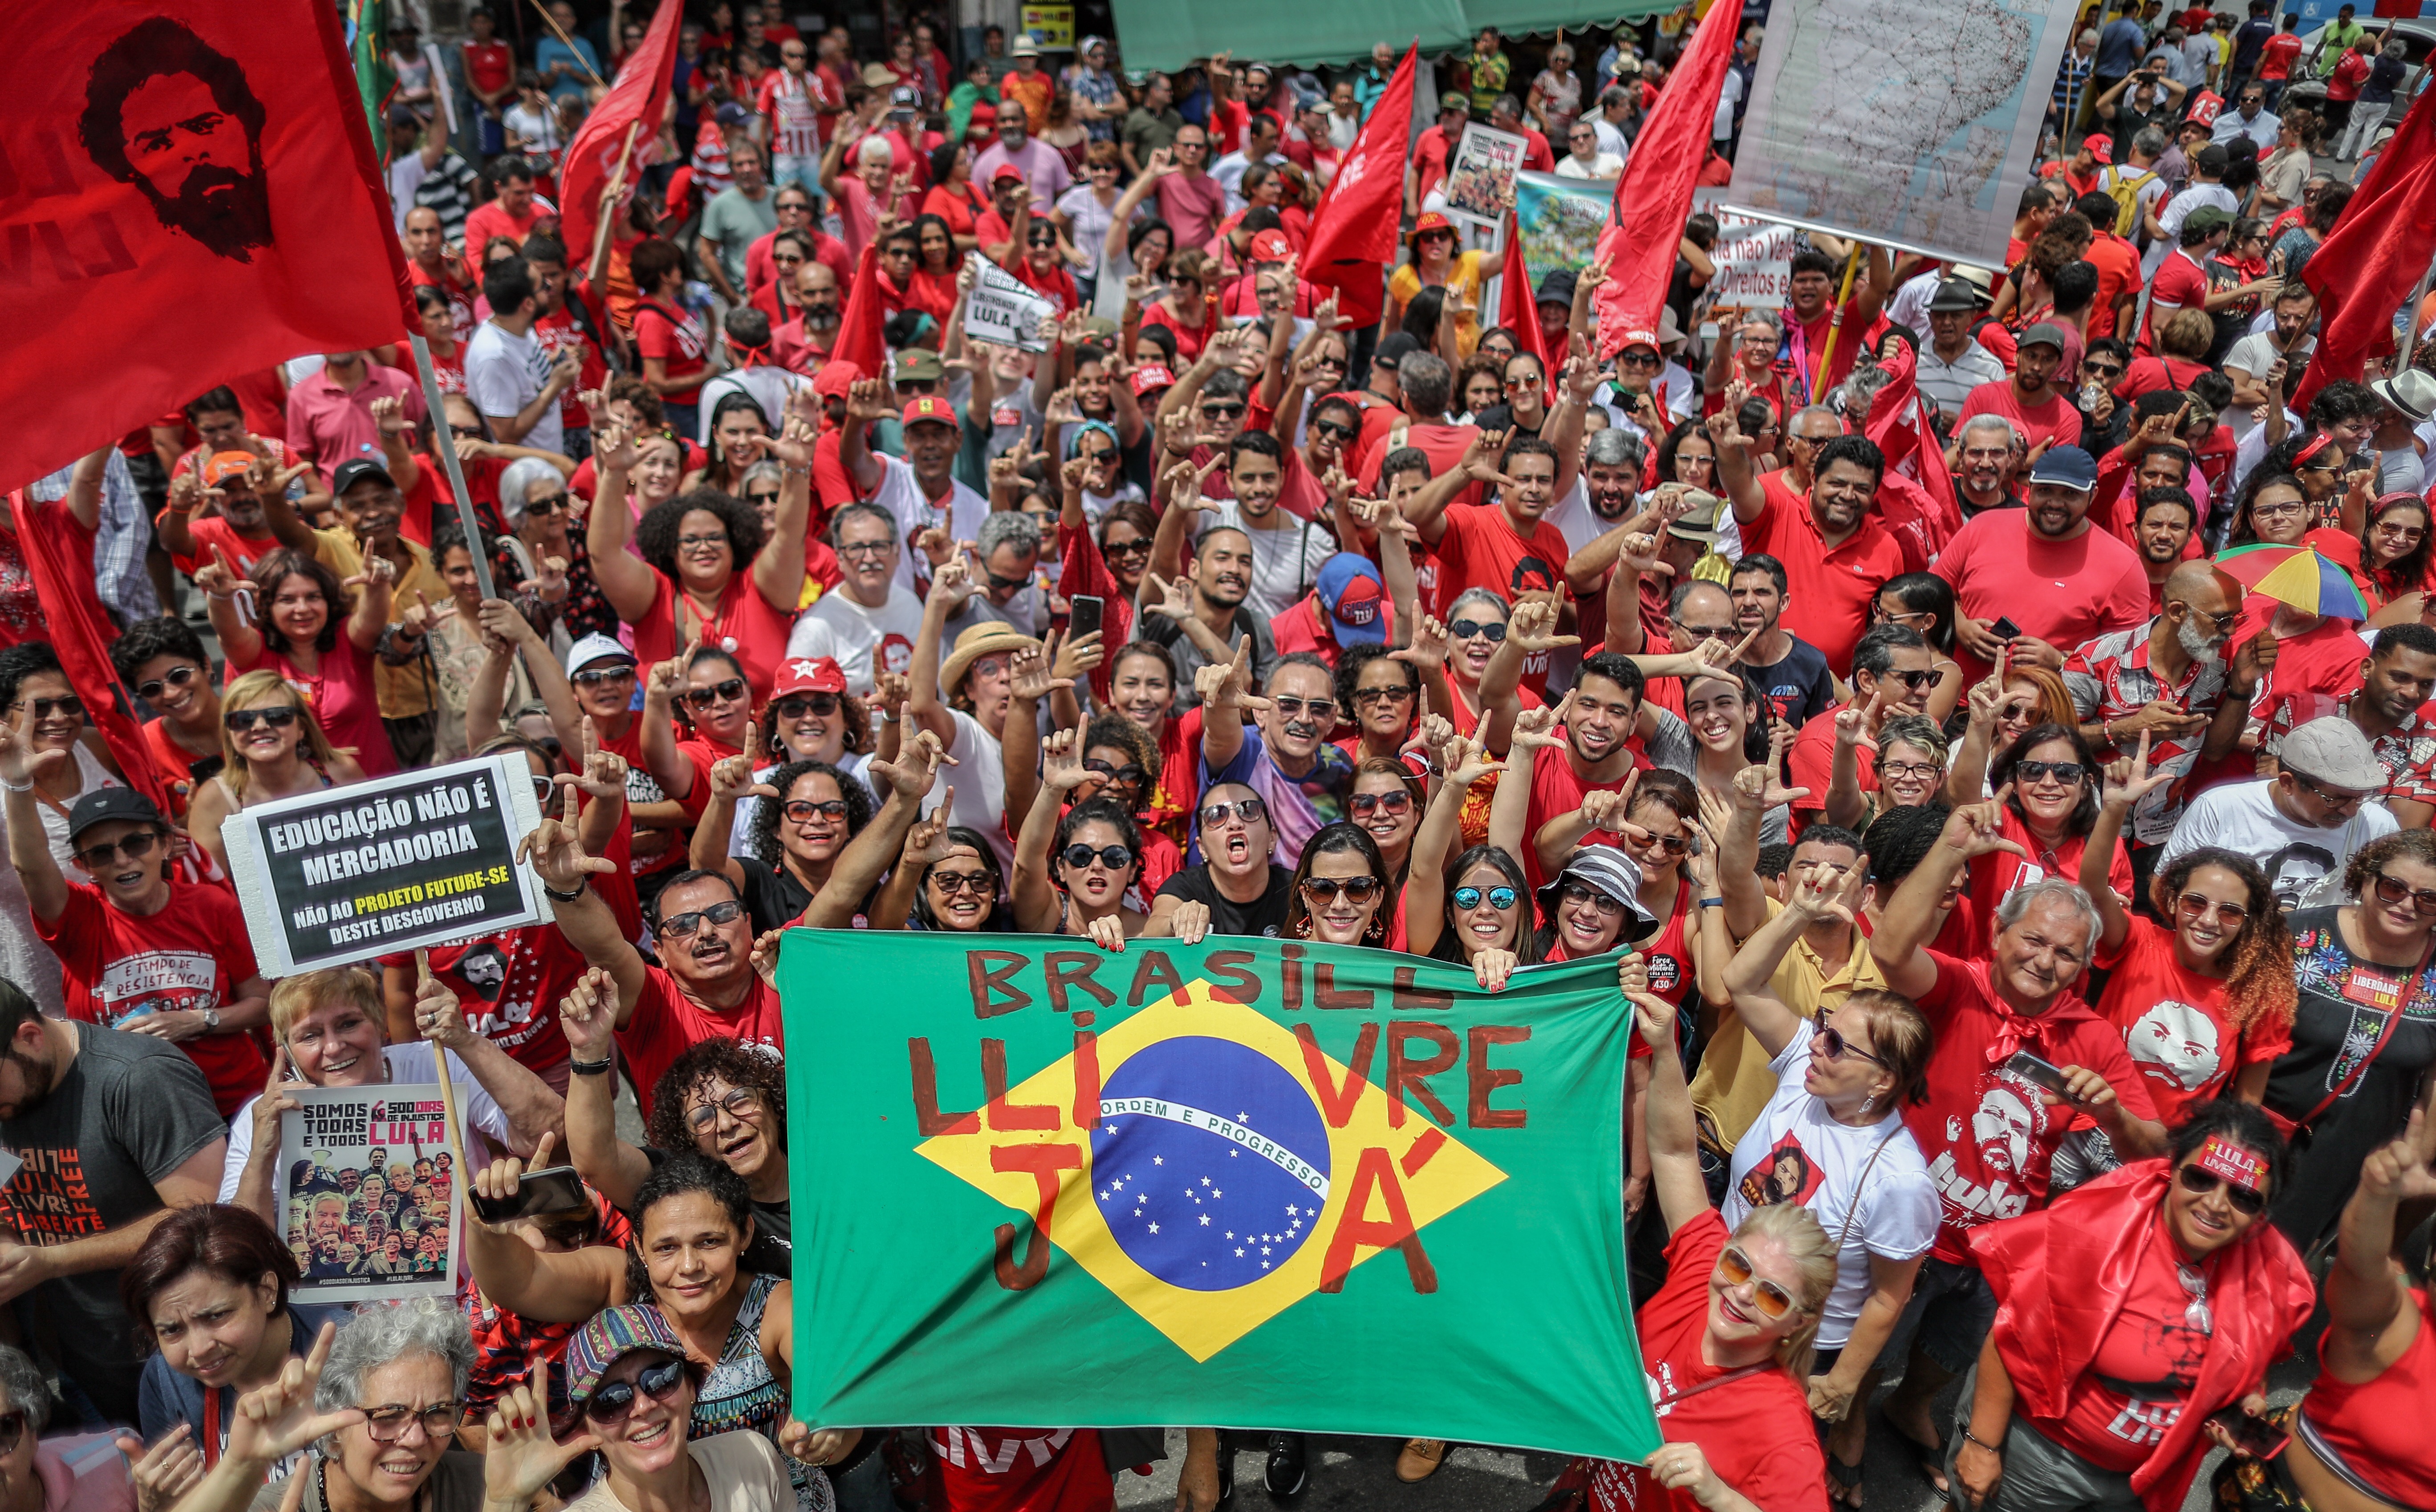 Galeria: Caravana Lula Livre com Fernando Haddad no Nordeste